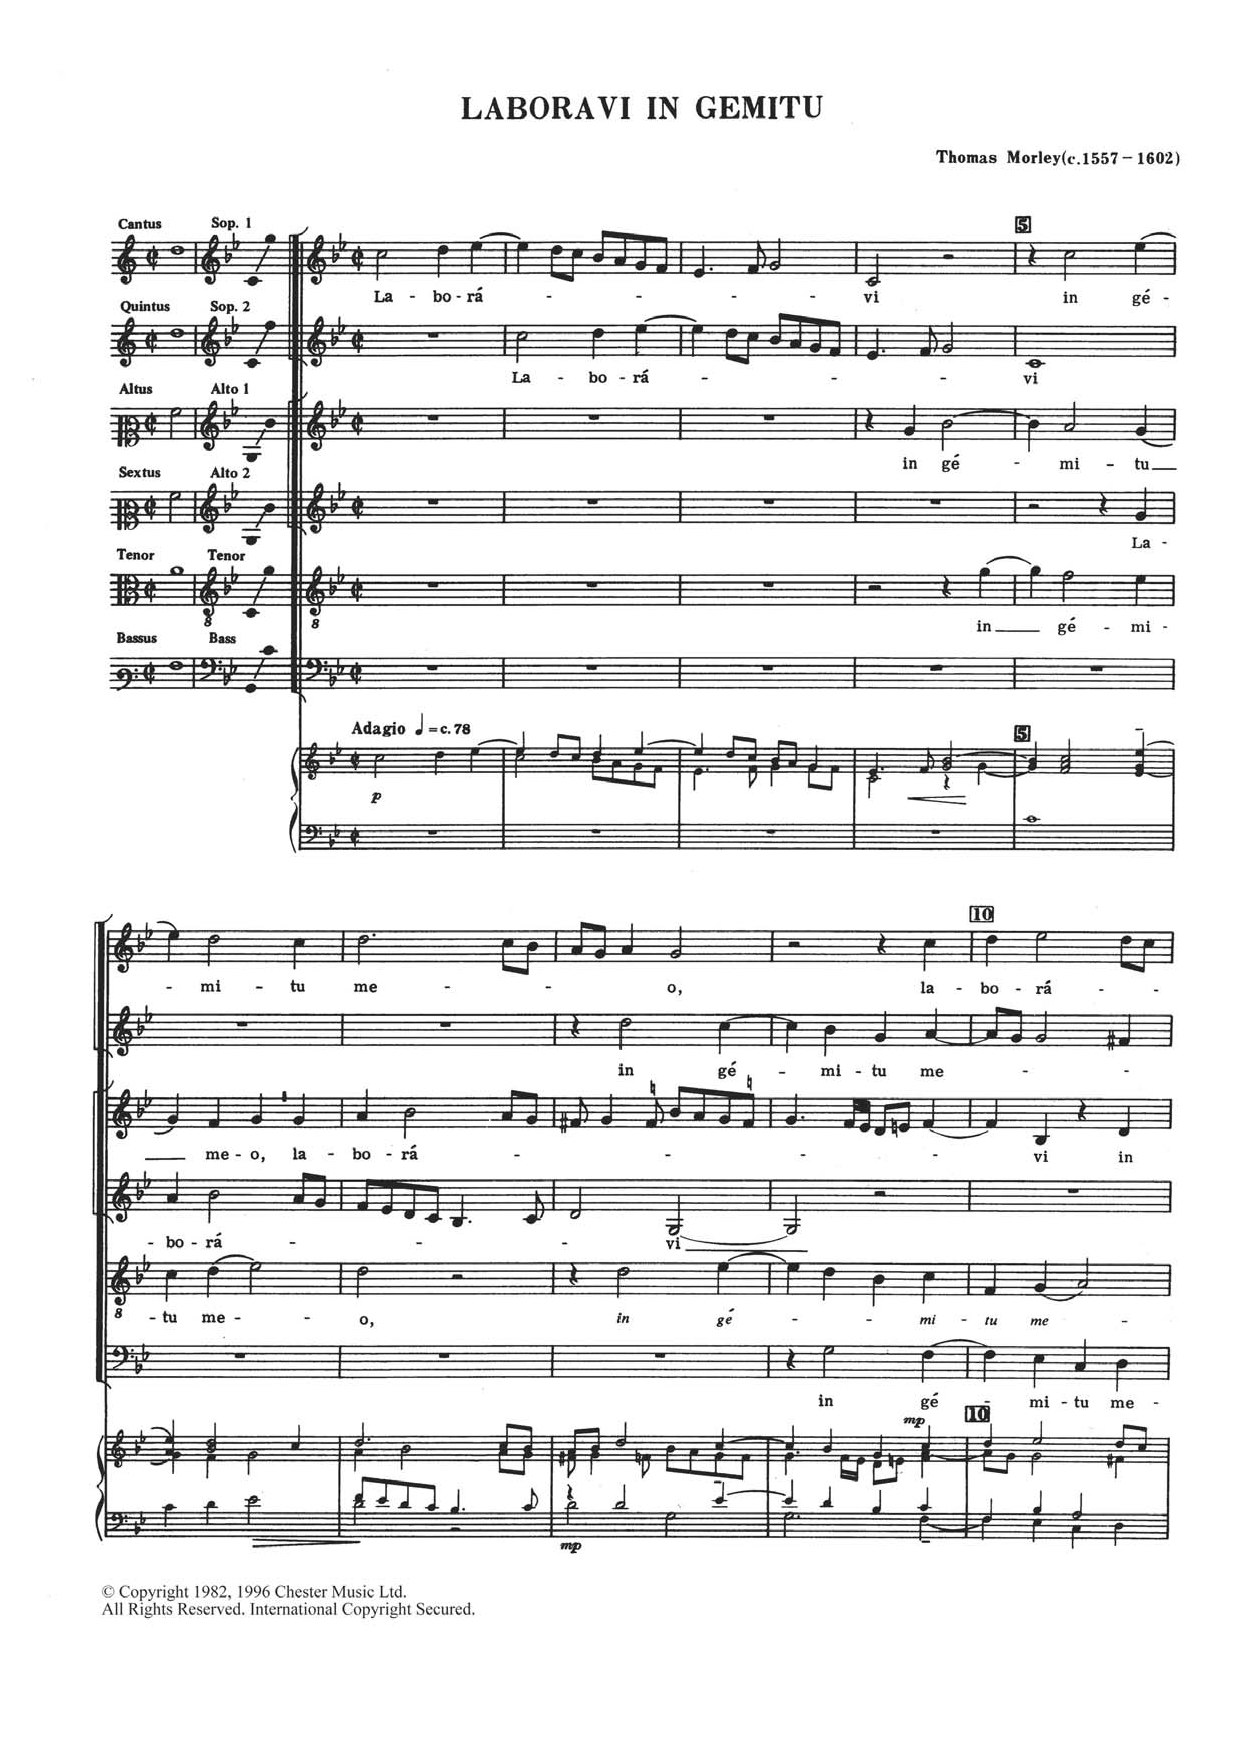 Thomas Morley Laboravi In Gemitu Sheet Music Notes & Chords for Choral SAATB - Download or Print PDF